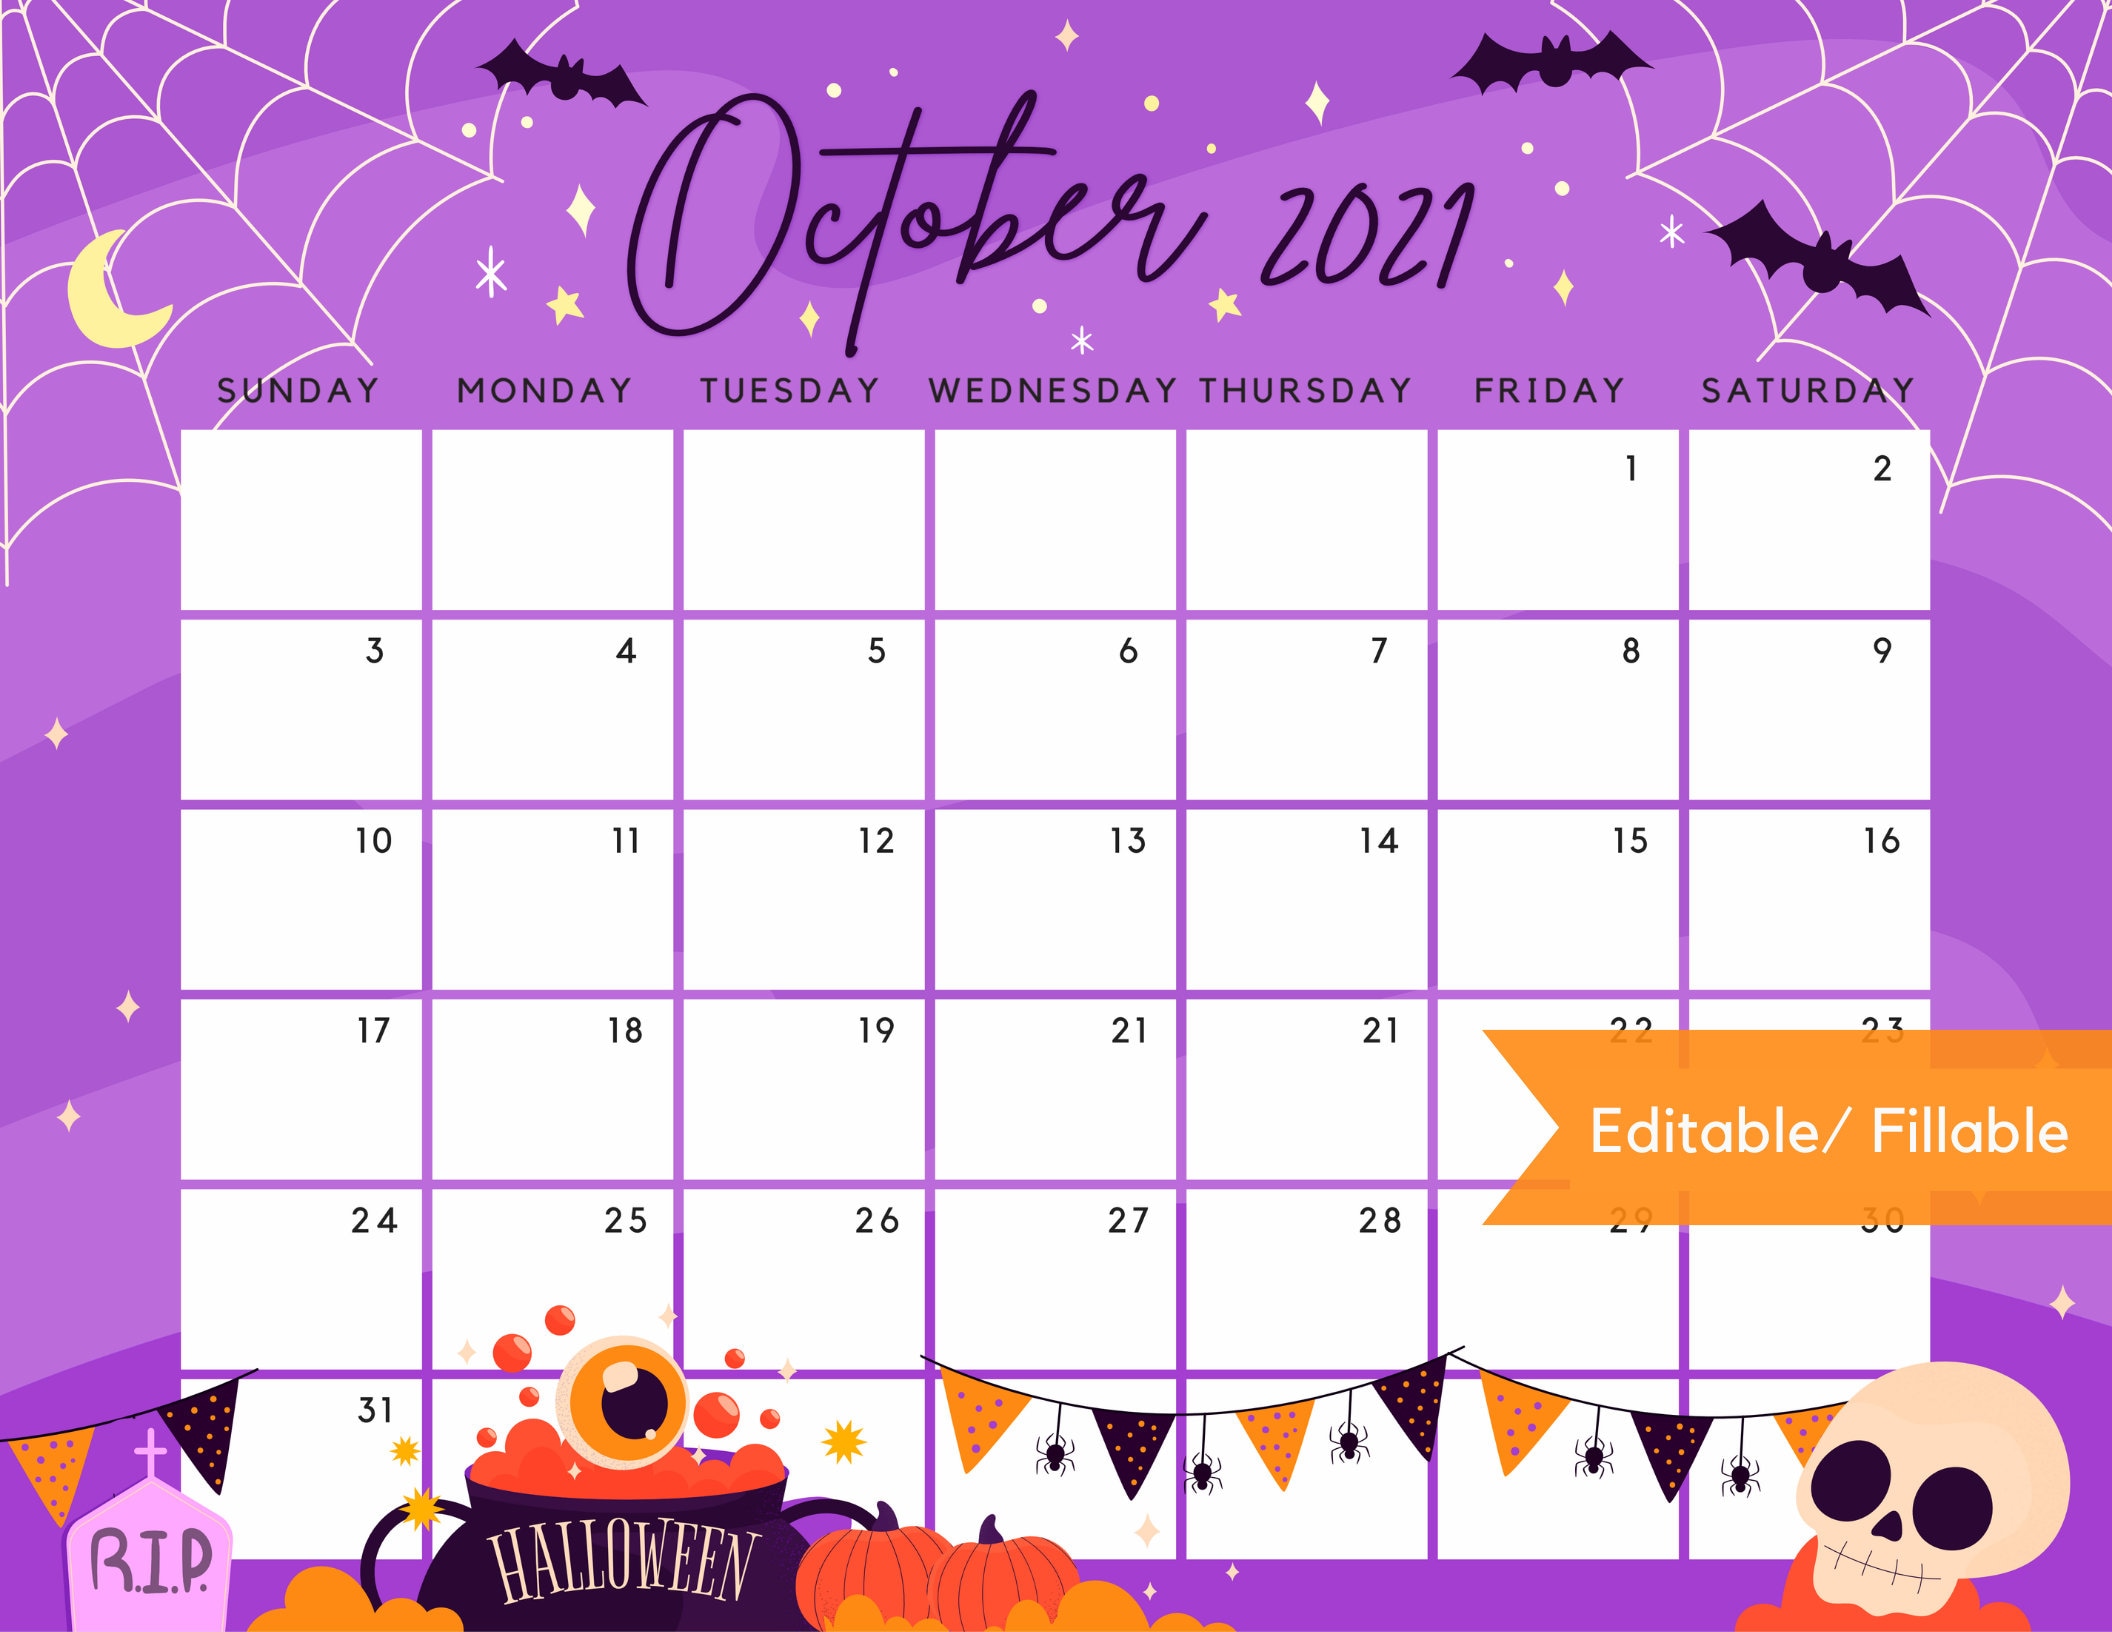 October 2021 Calendar Cute & Spooky Halloween Night Party | Etsy